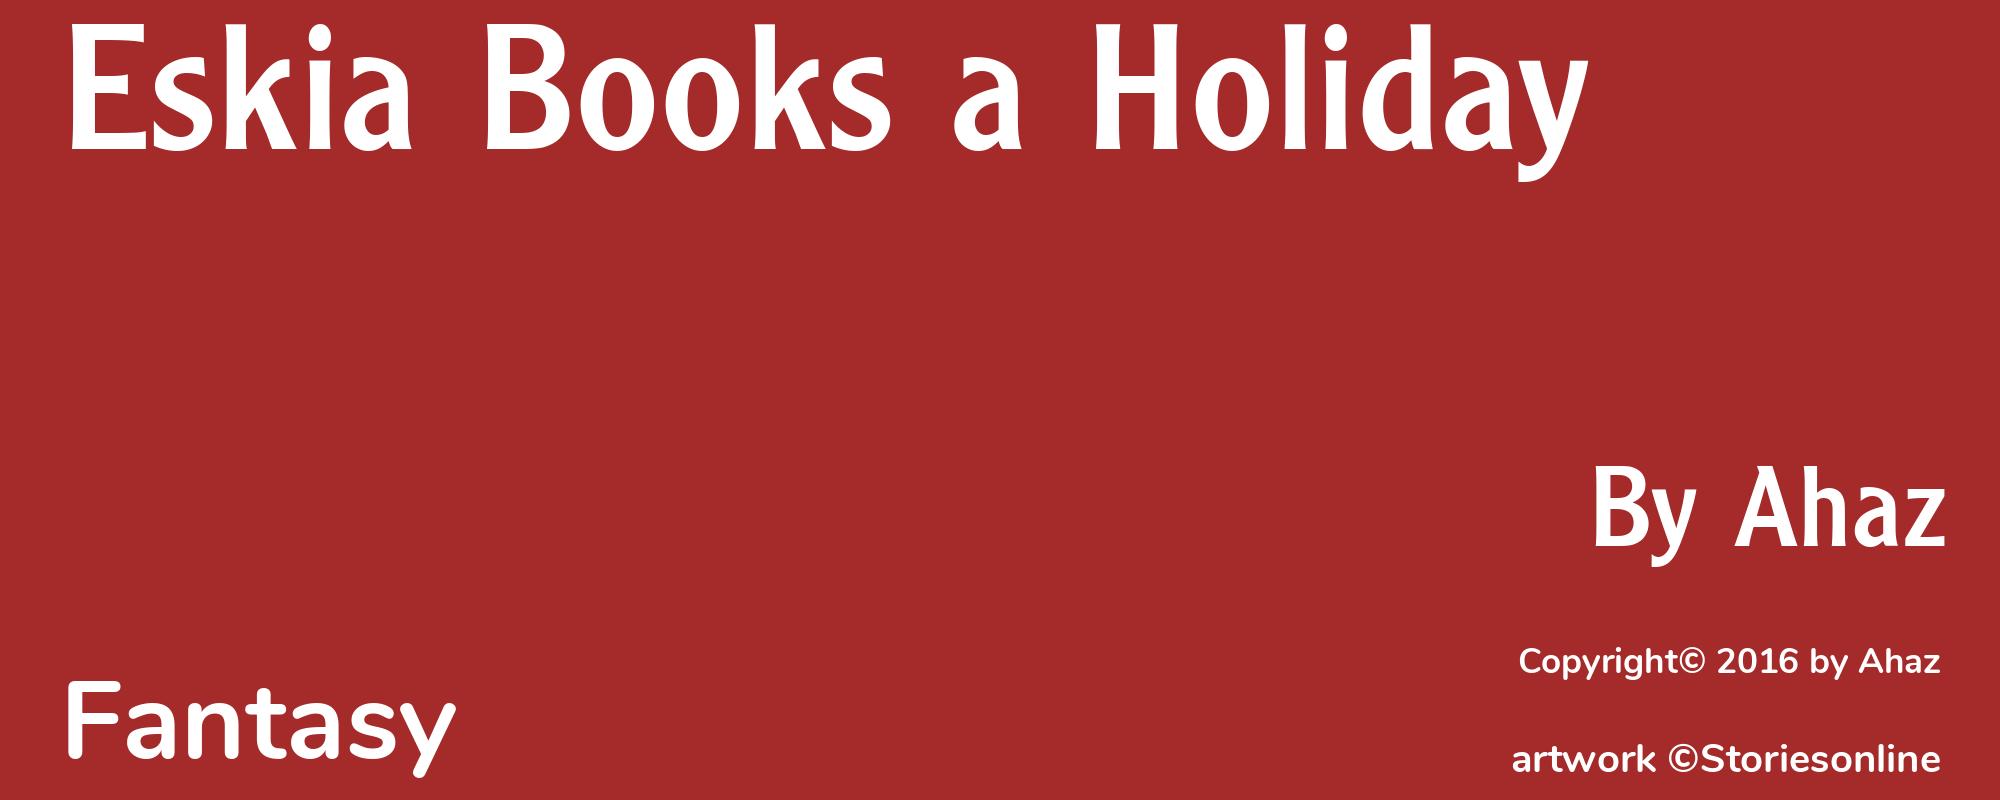 Eskia Books a Holiday - Cover